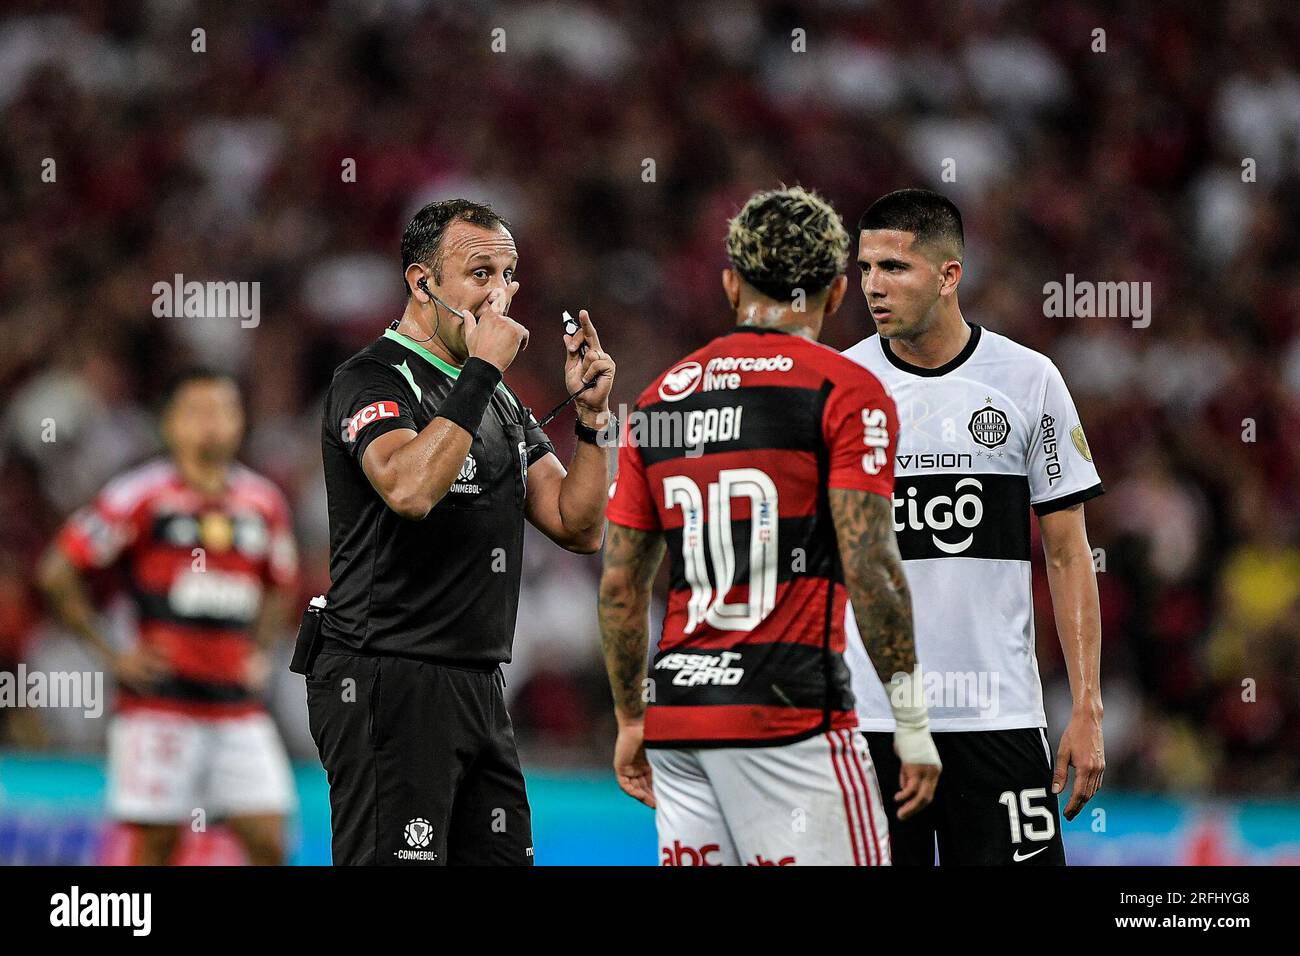 Flamengo x Olimpia é hoje? Onde vai passar a Libertadores